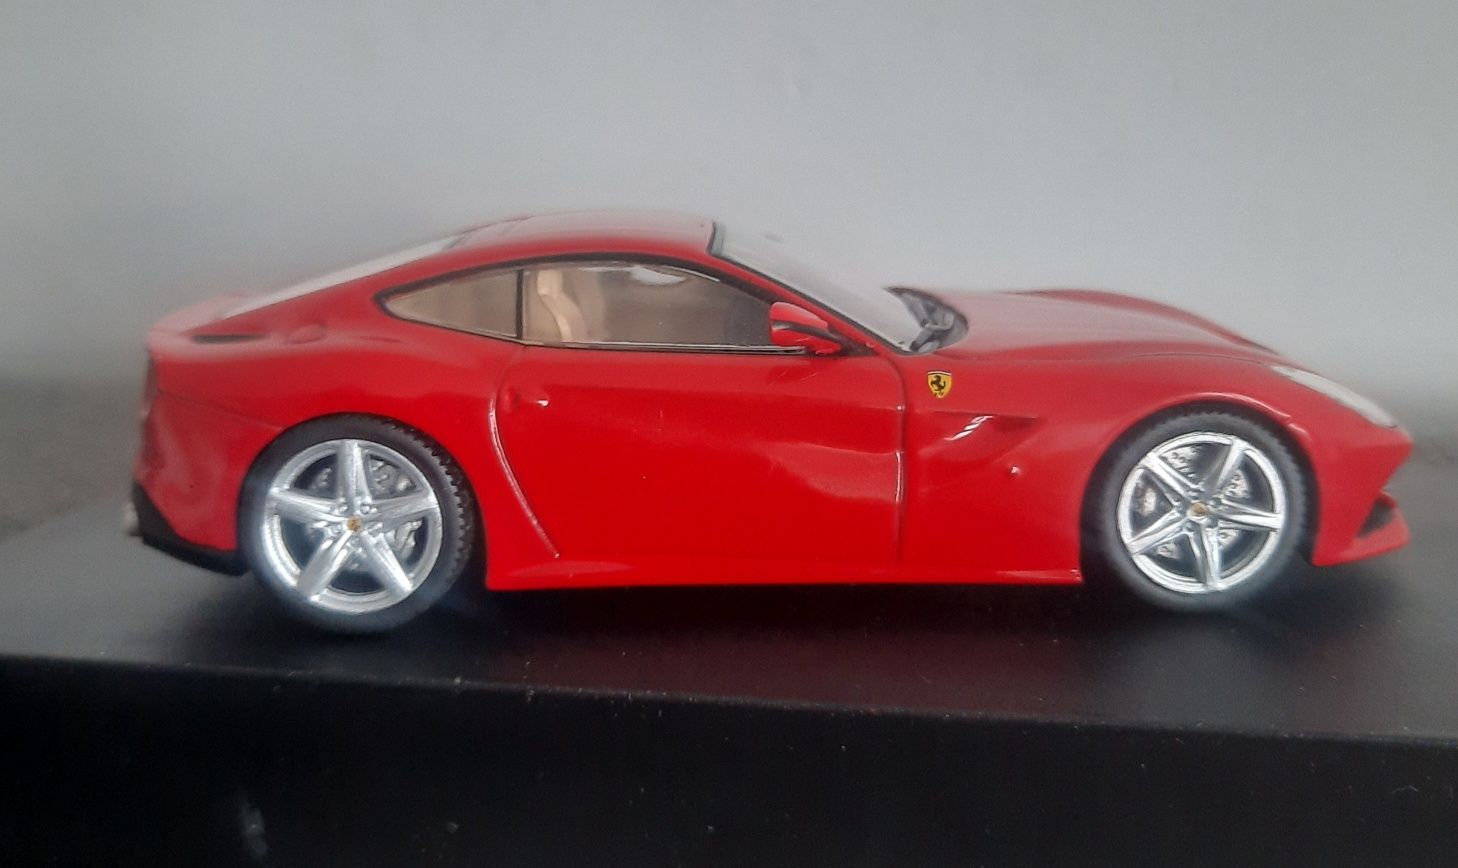 Ferrari f12 berlinetta altaya 1:43